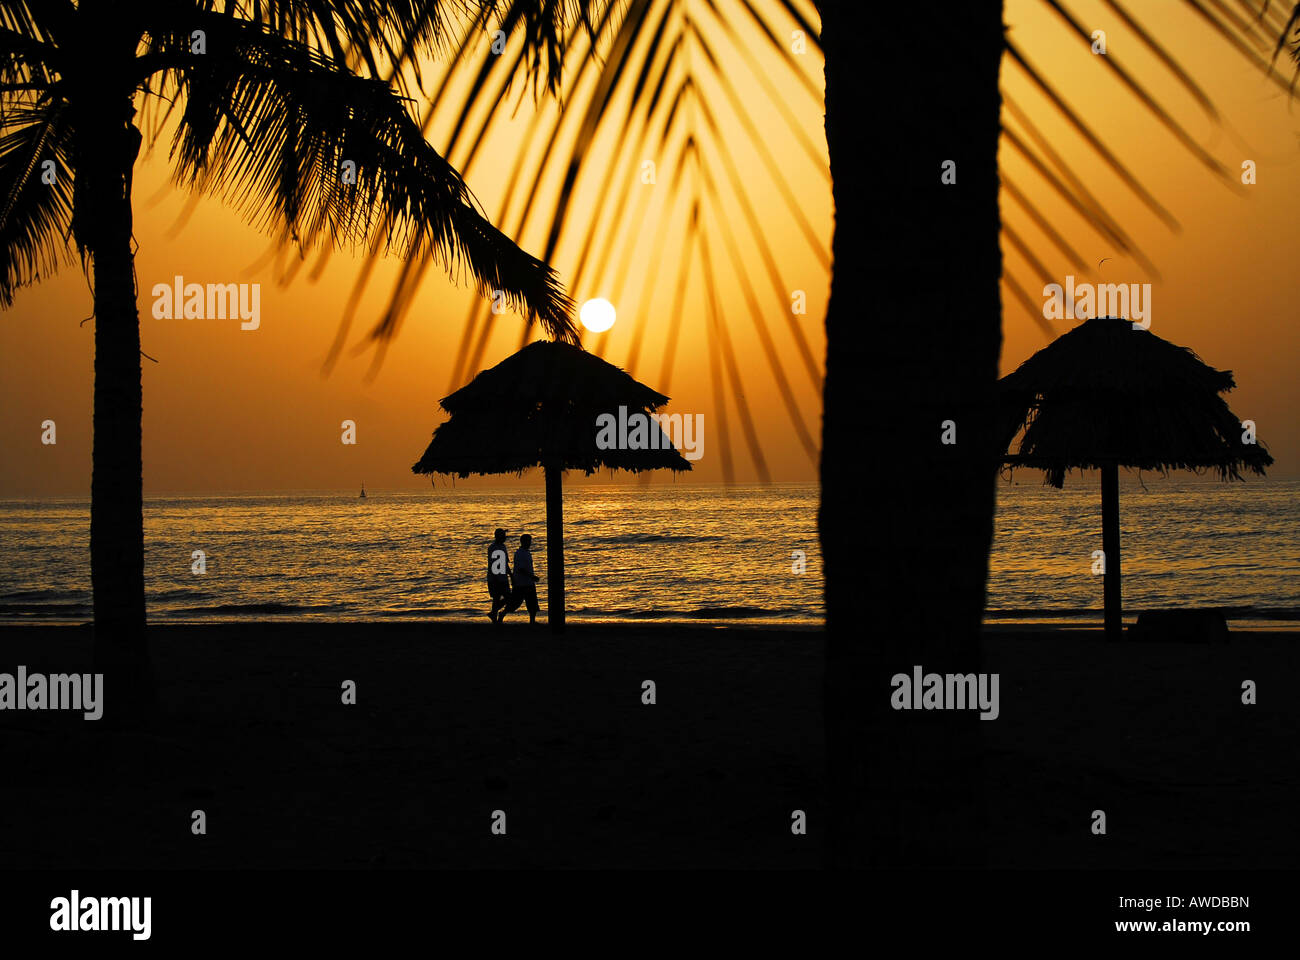 Sunset at the Gulf of Oman, Muscat, Oman Stock Photo